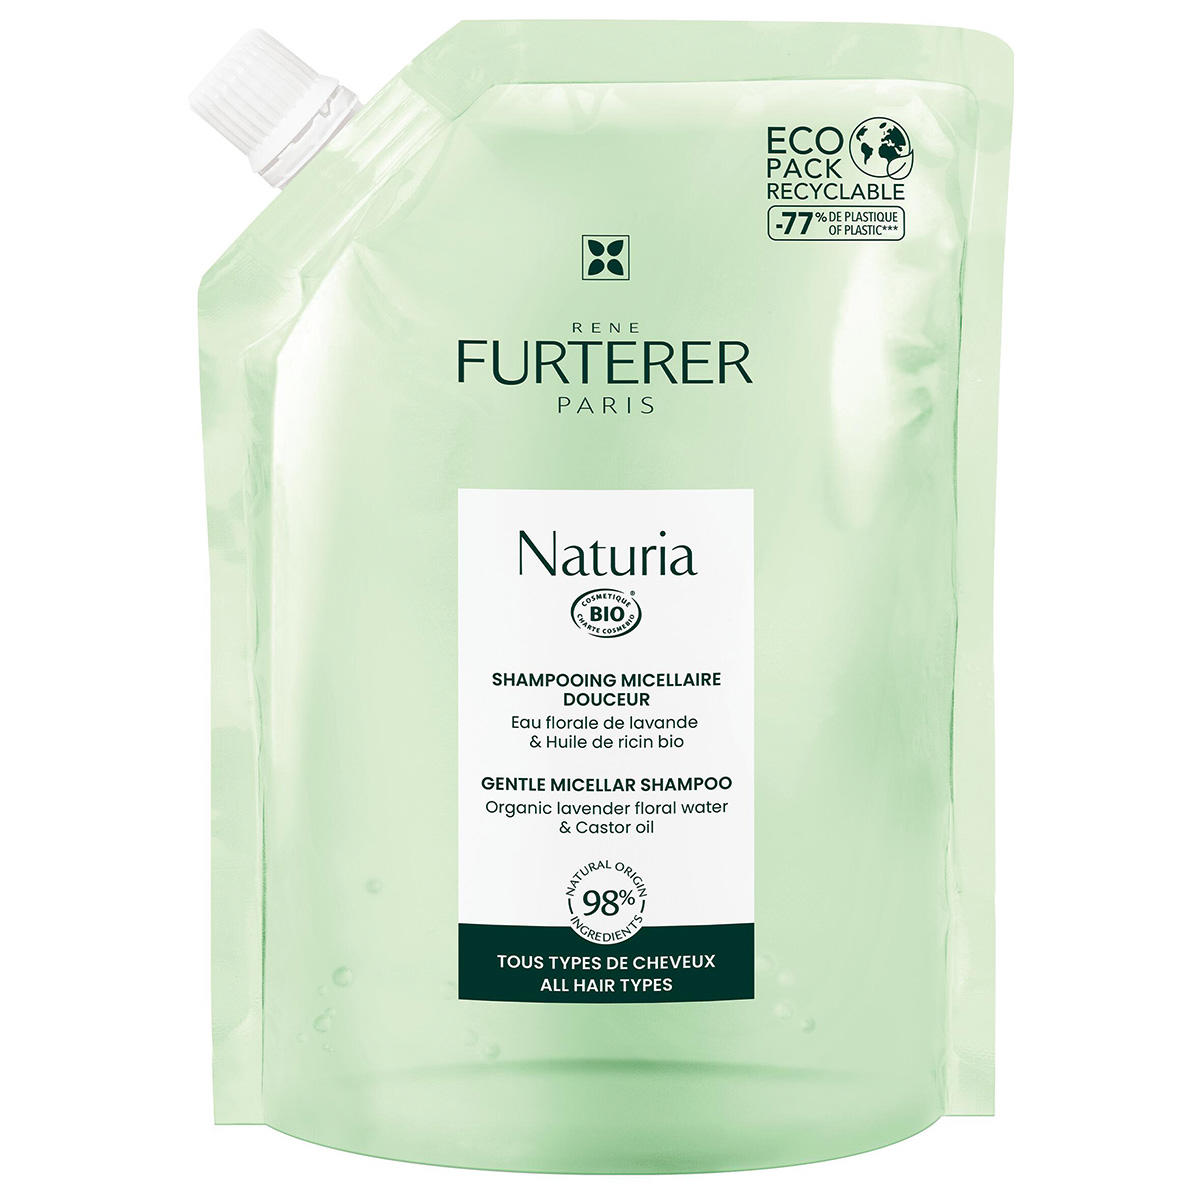 René Furterer Naturia Shampooing micellaire doux Recharge 400 ml - 1